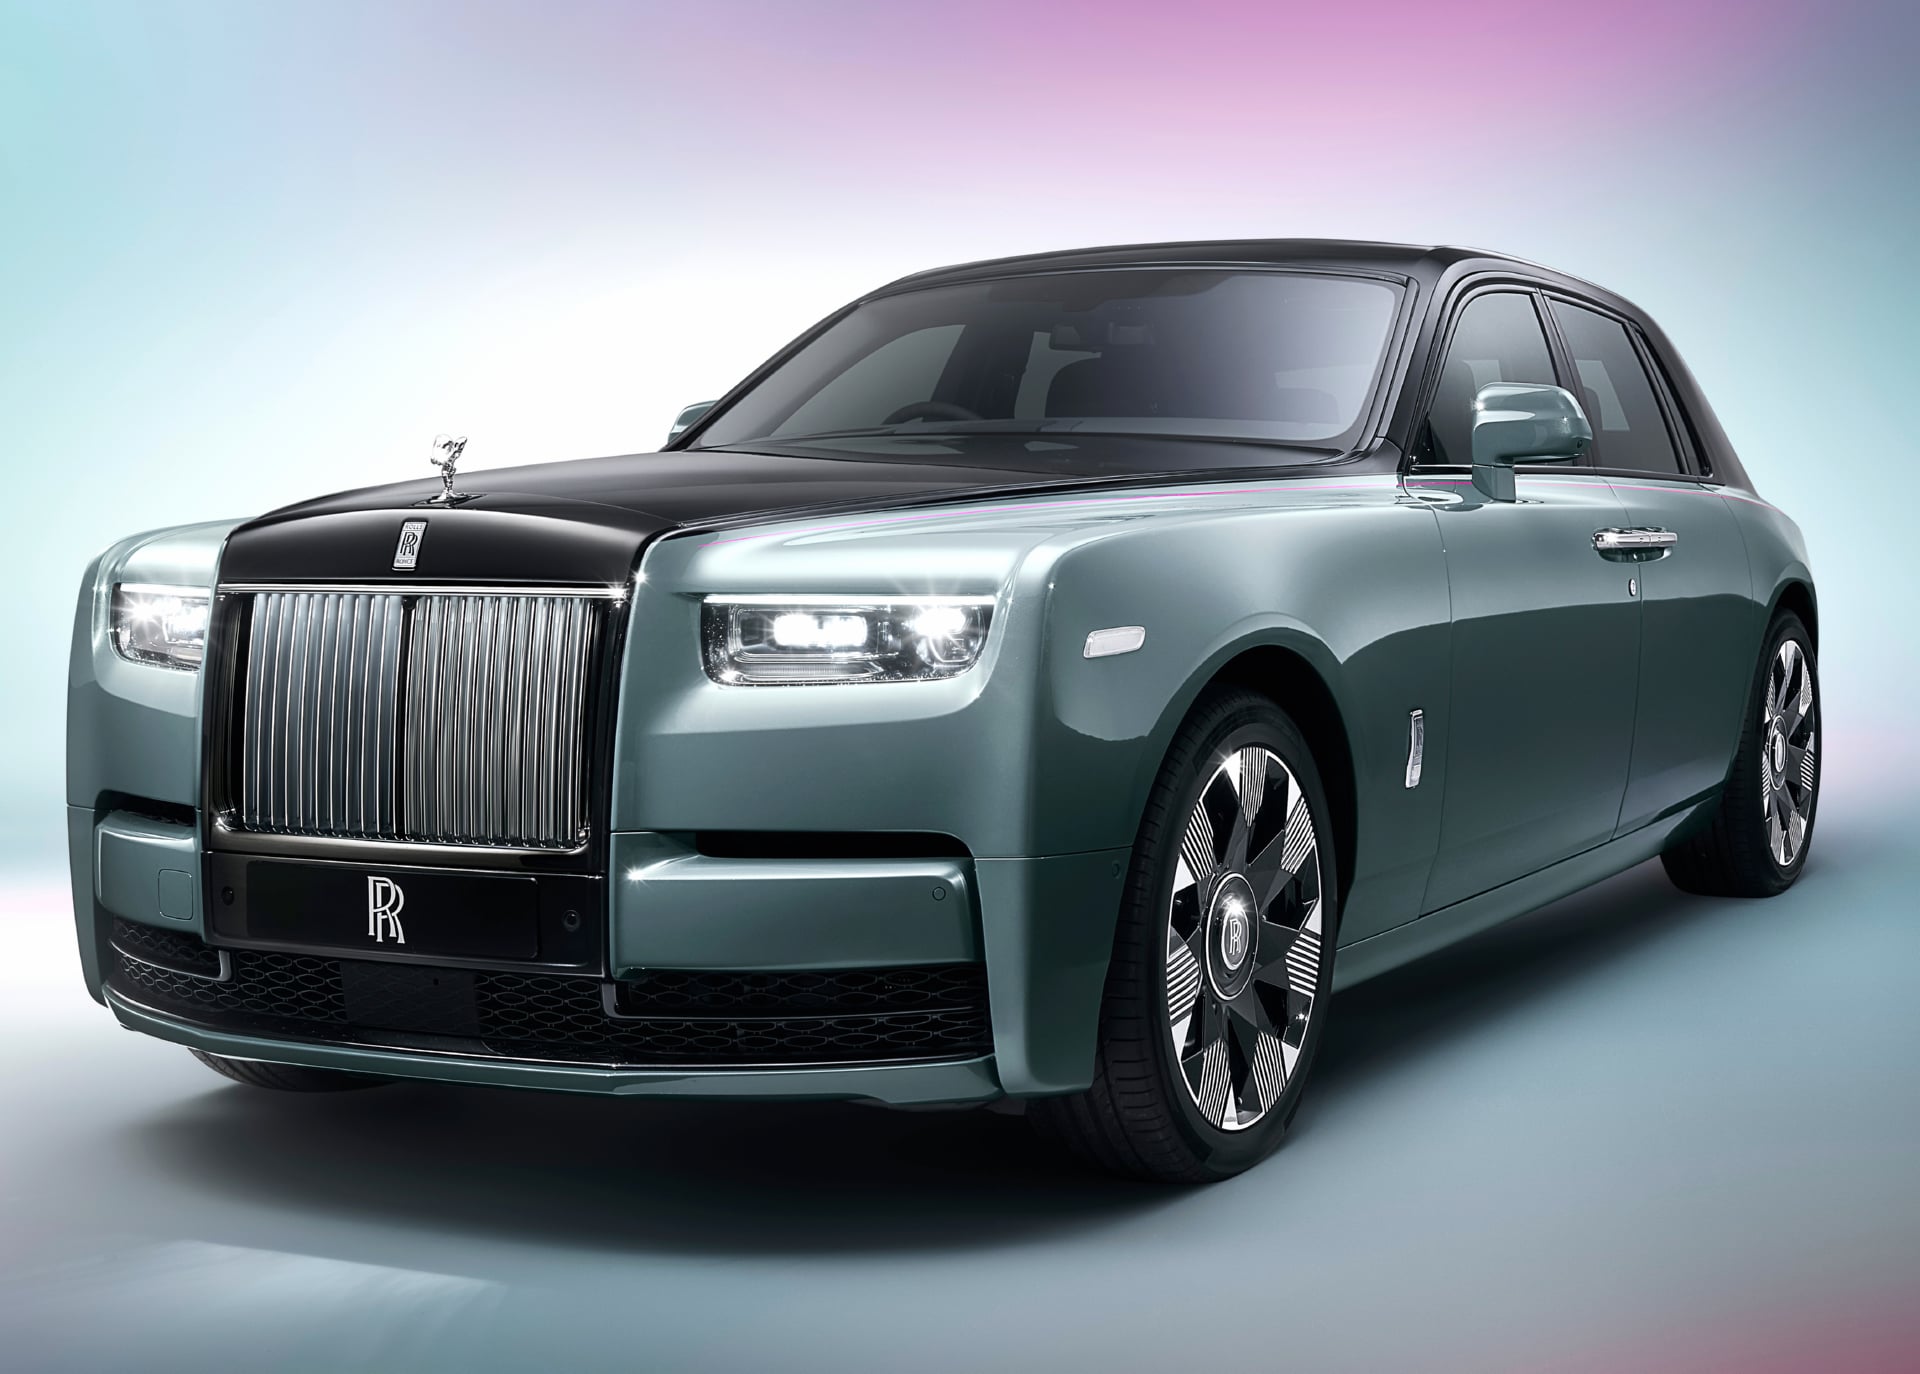 Rolls-Royce Phantom Series II at 1280 x 960 size wallpapers HD quality